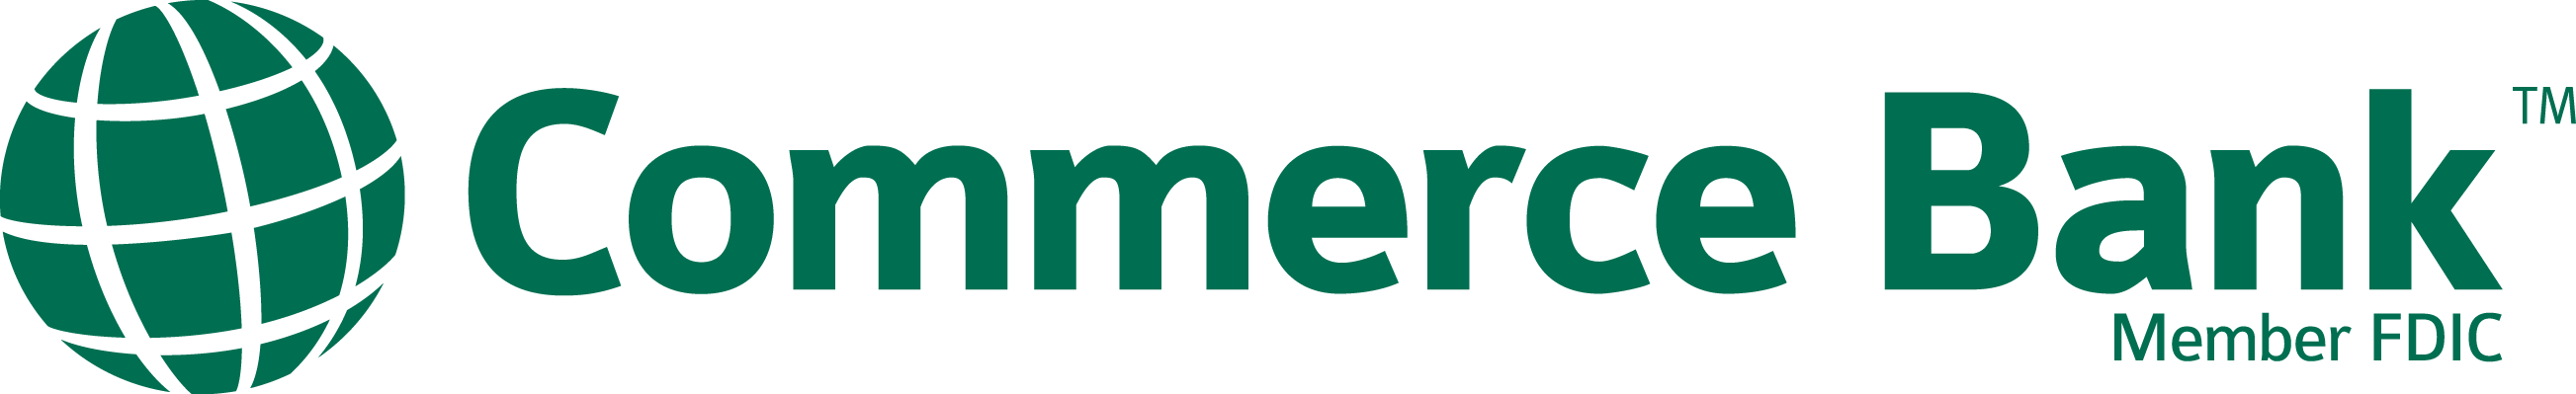 Commerce Bank Brand Logo